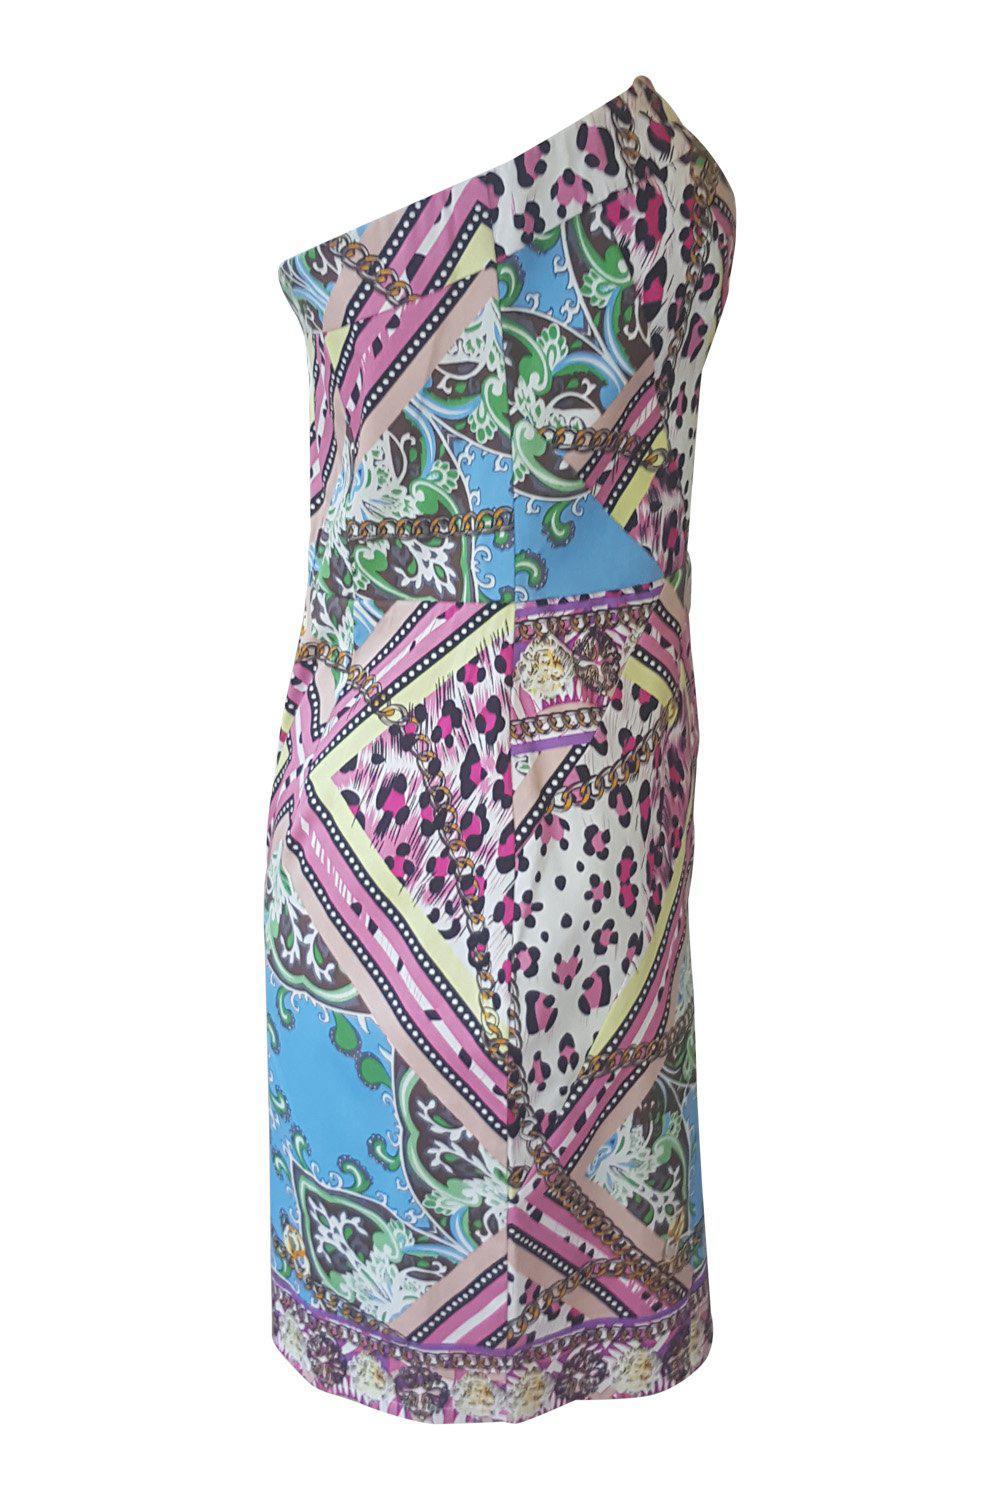 LIPSY LONDON Scarf Print Pink Blue Bodycon Summer Dress (UK 10)-Lipsy London-The Freperie